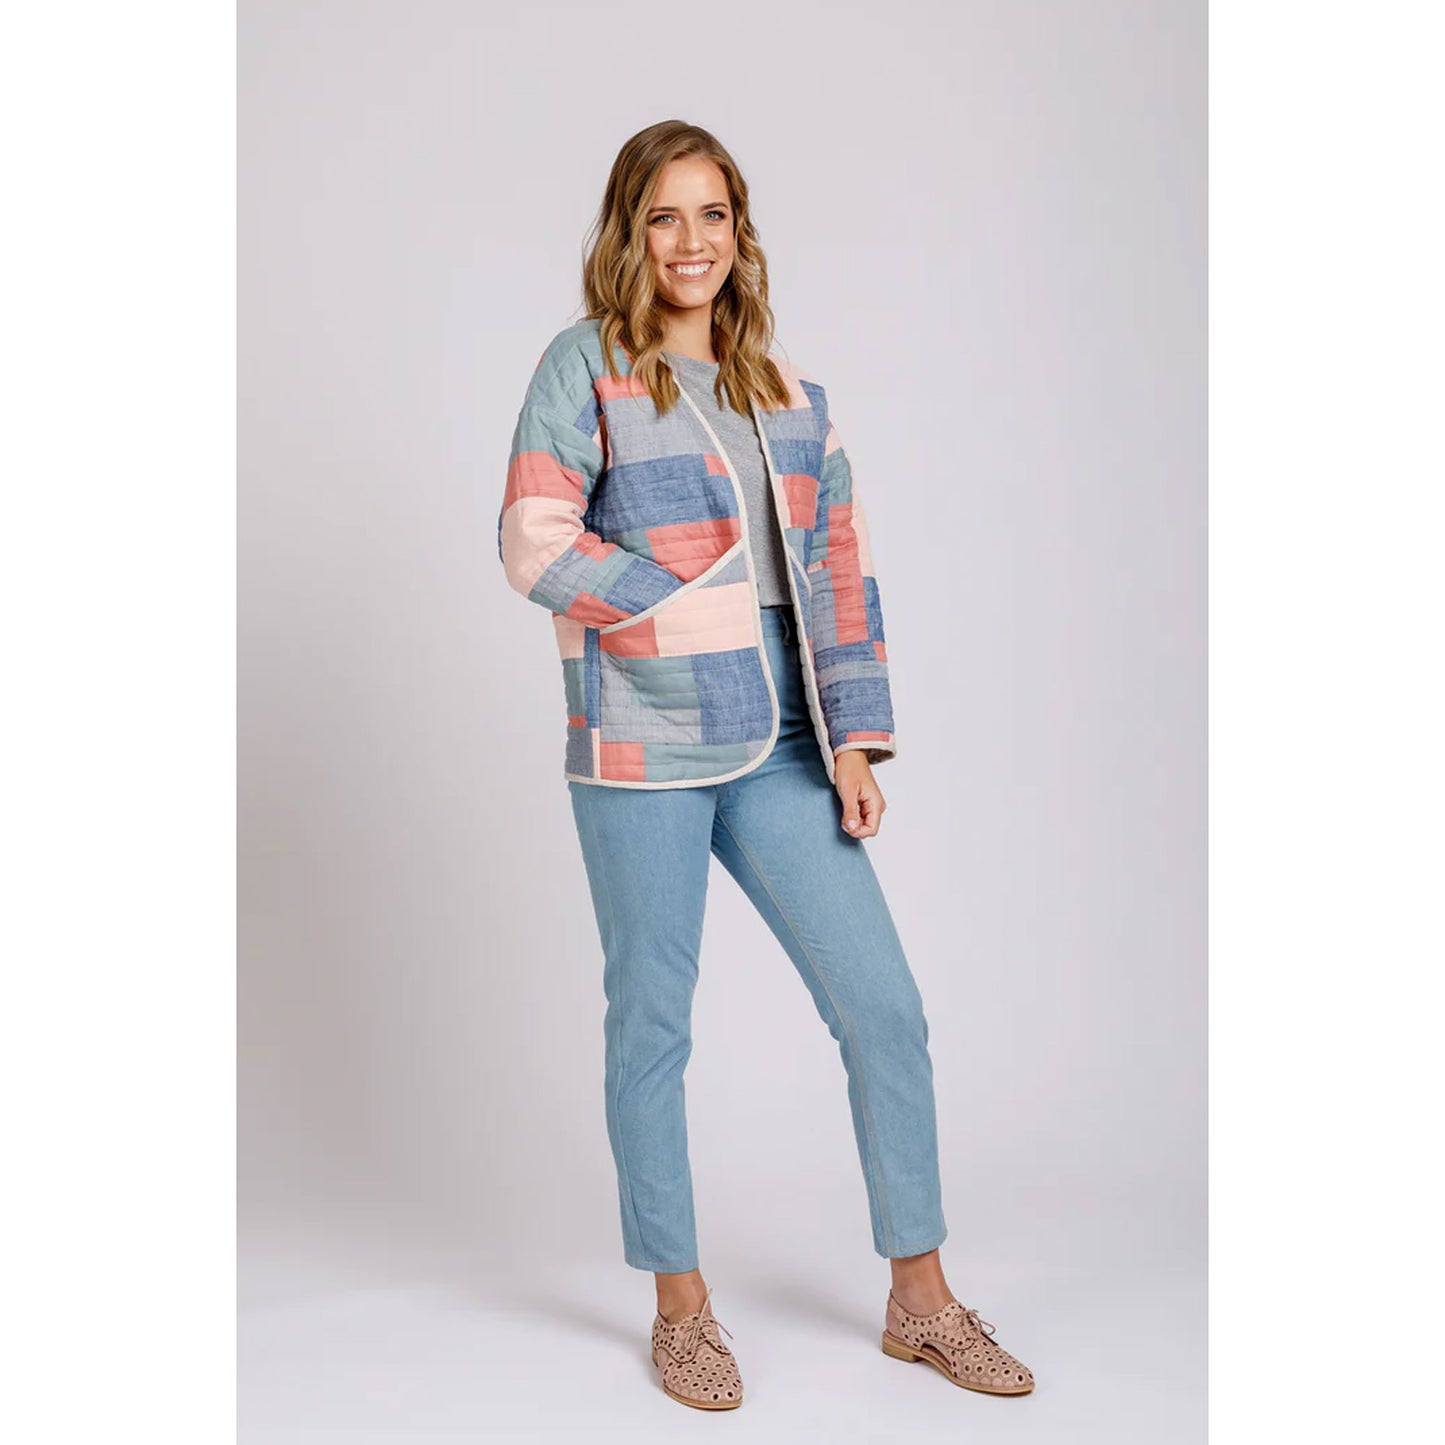 Hovea Jacket and Coat Sewing Pattern (Size 0-20) - Megan Nielsen Patterns